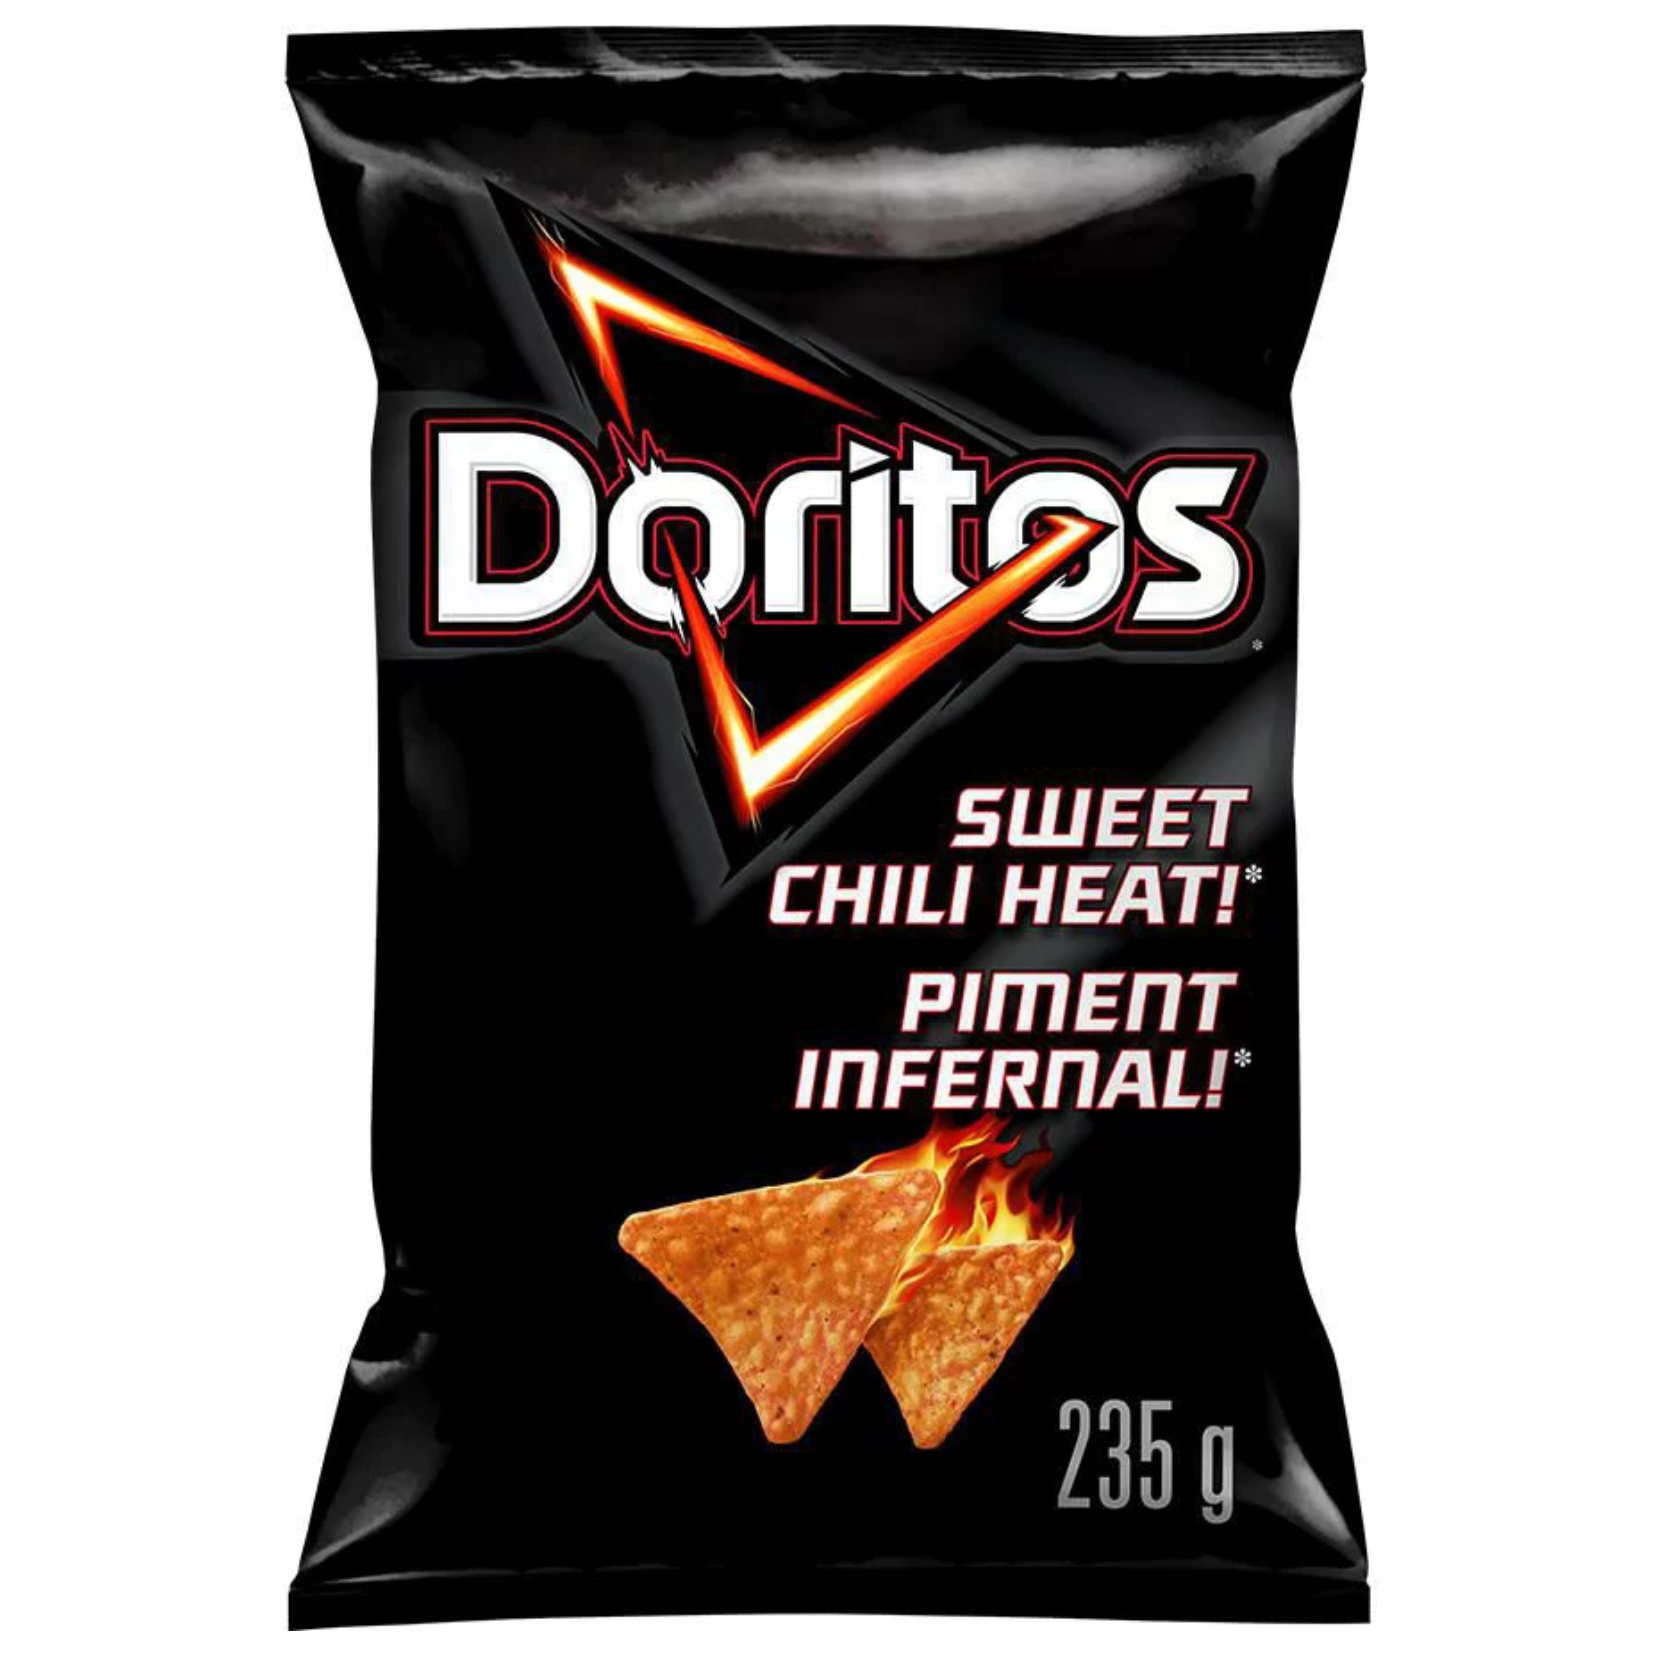 Doritos Sweet Chili Heat Chips 235g